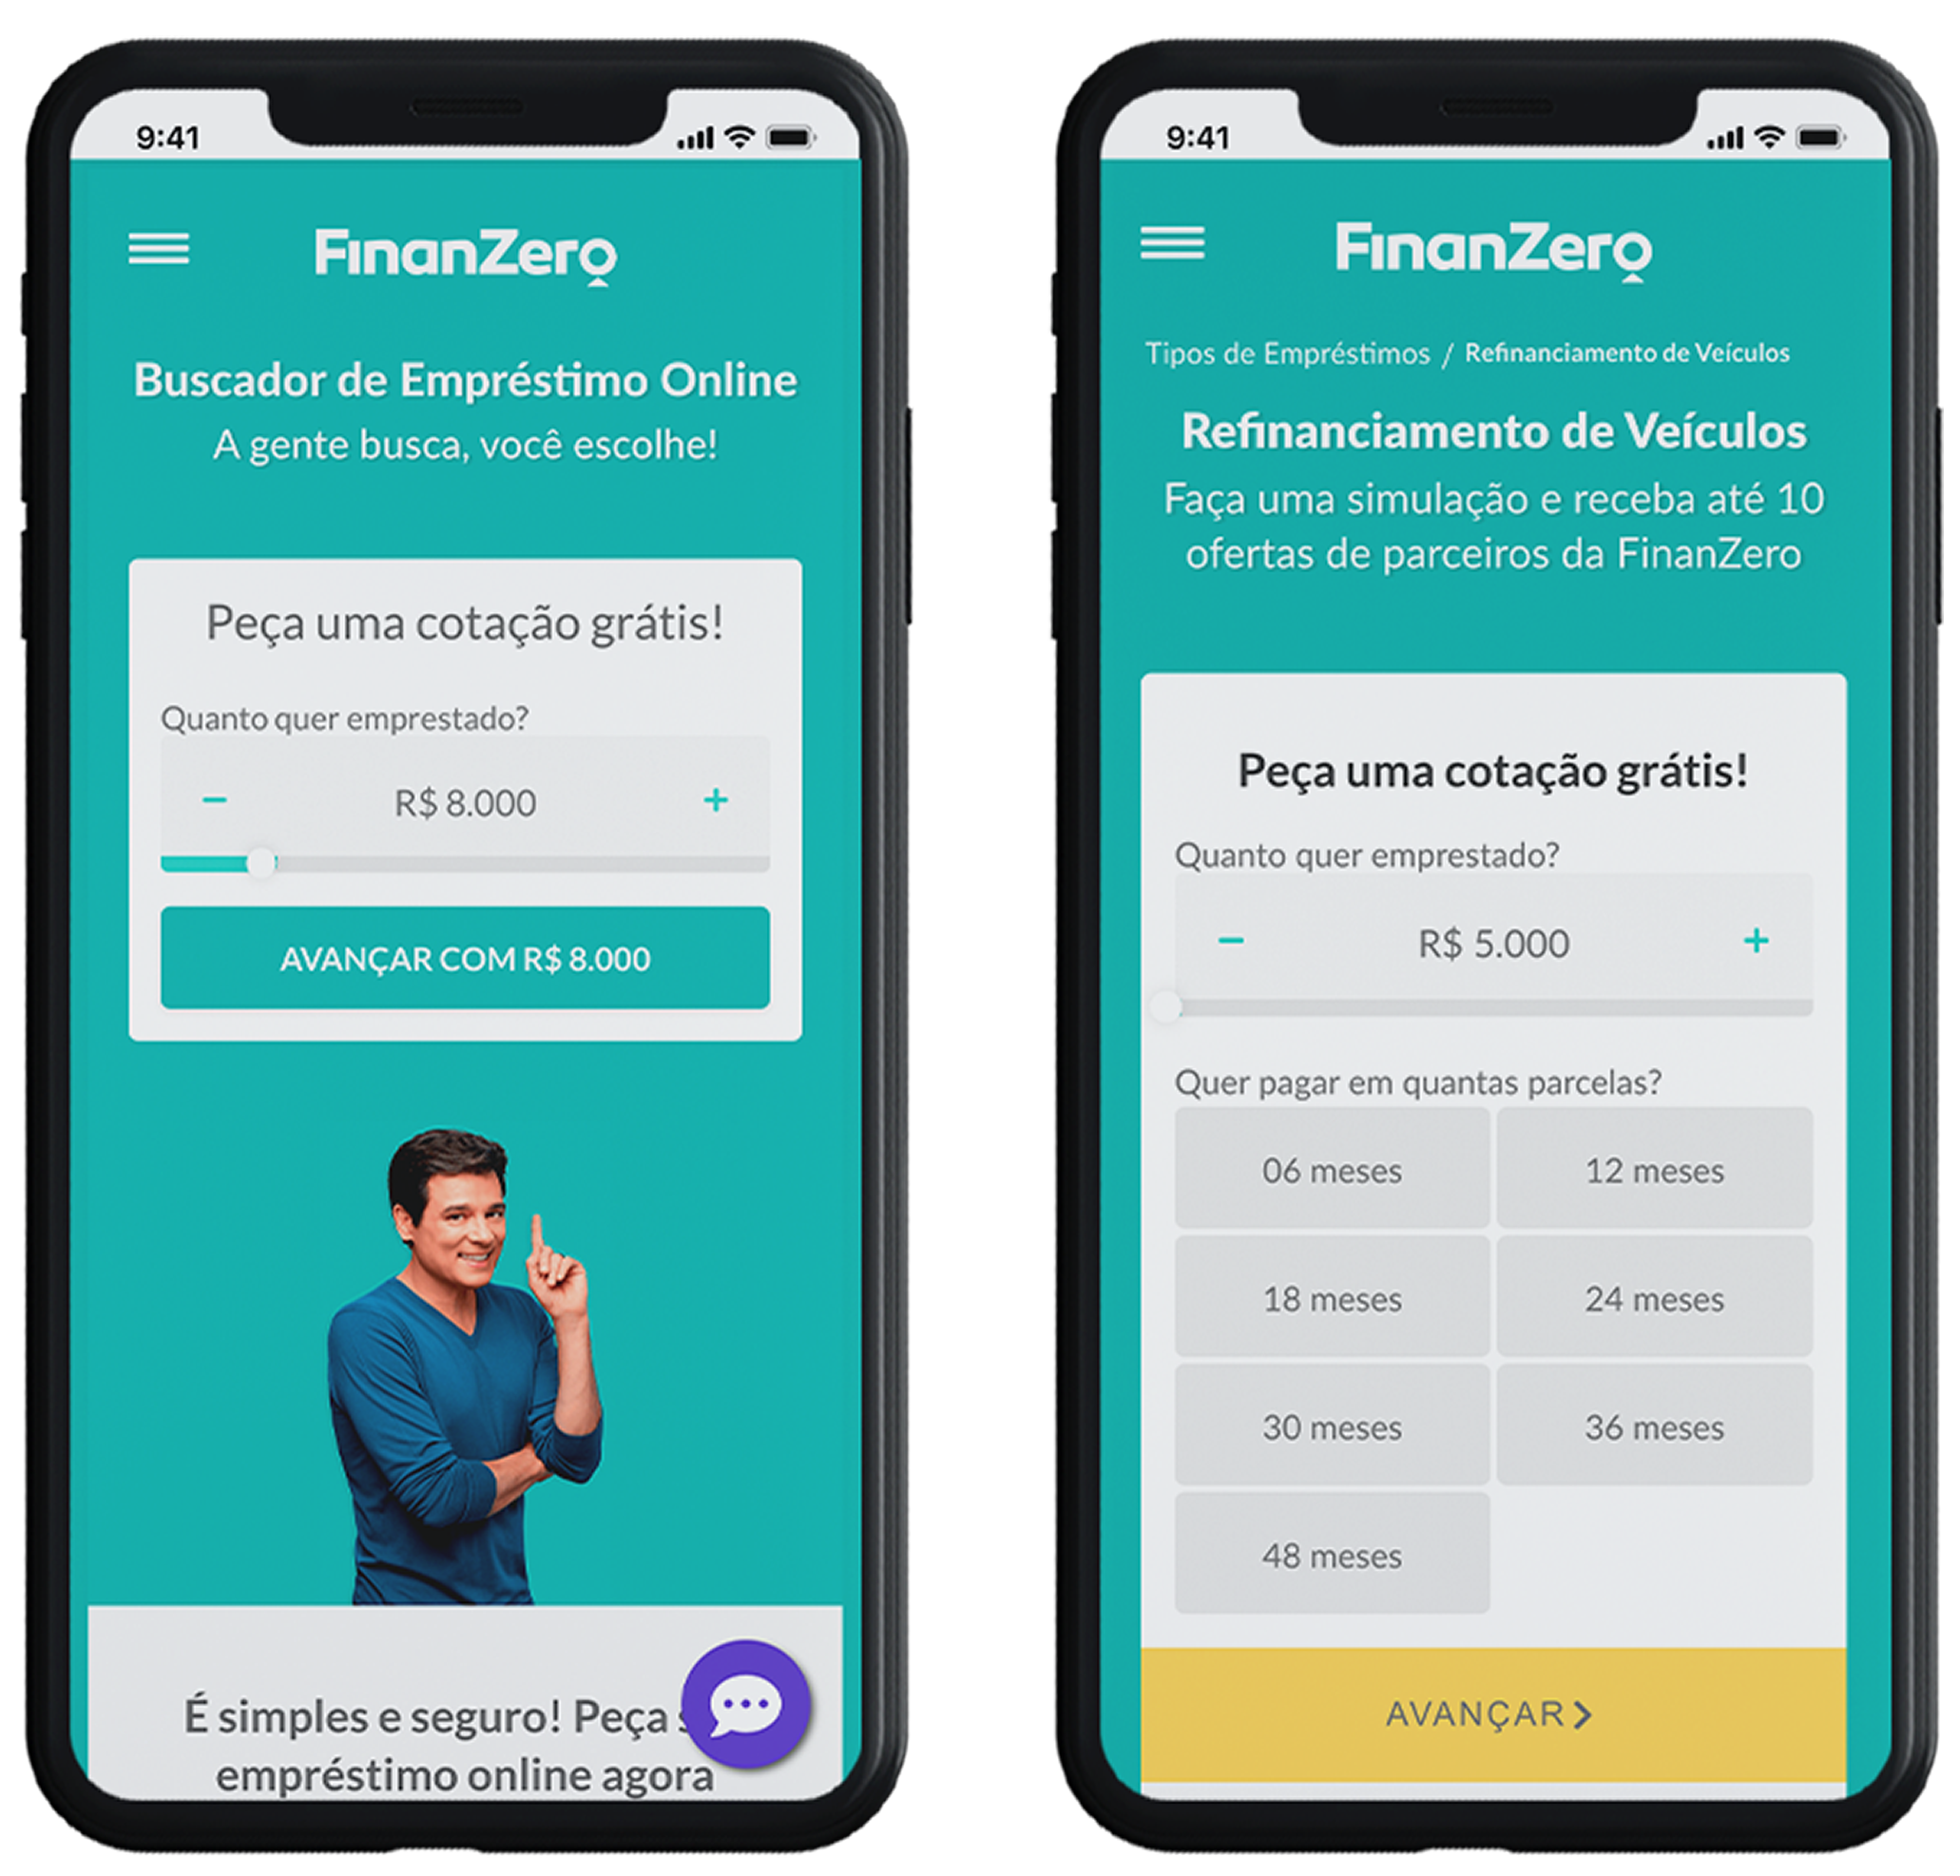 FinanZero, Brazil's free online credit marketplace, raises $7M